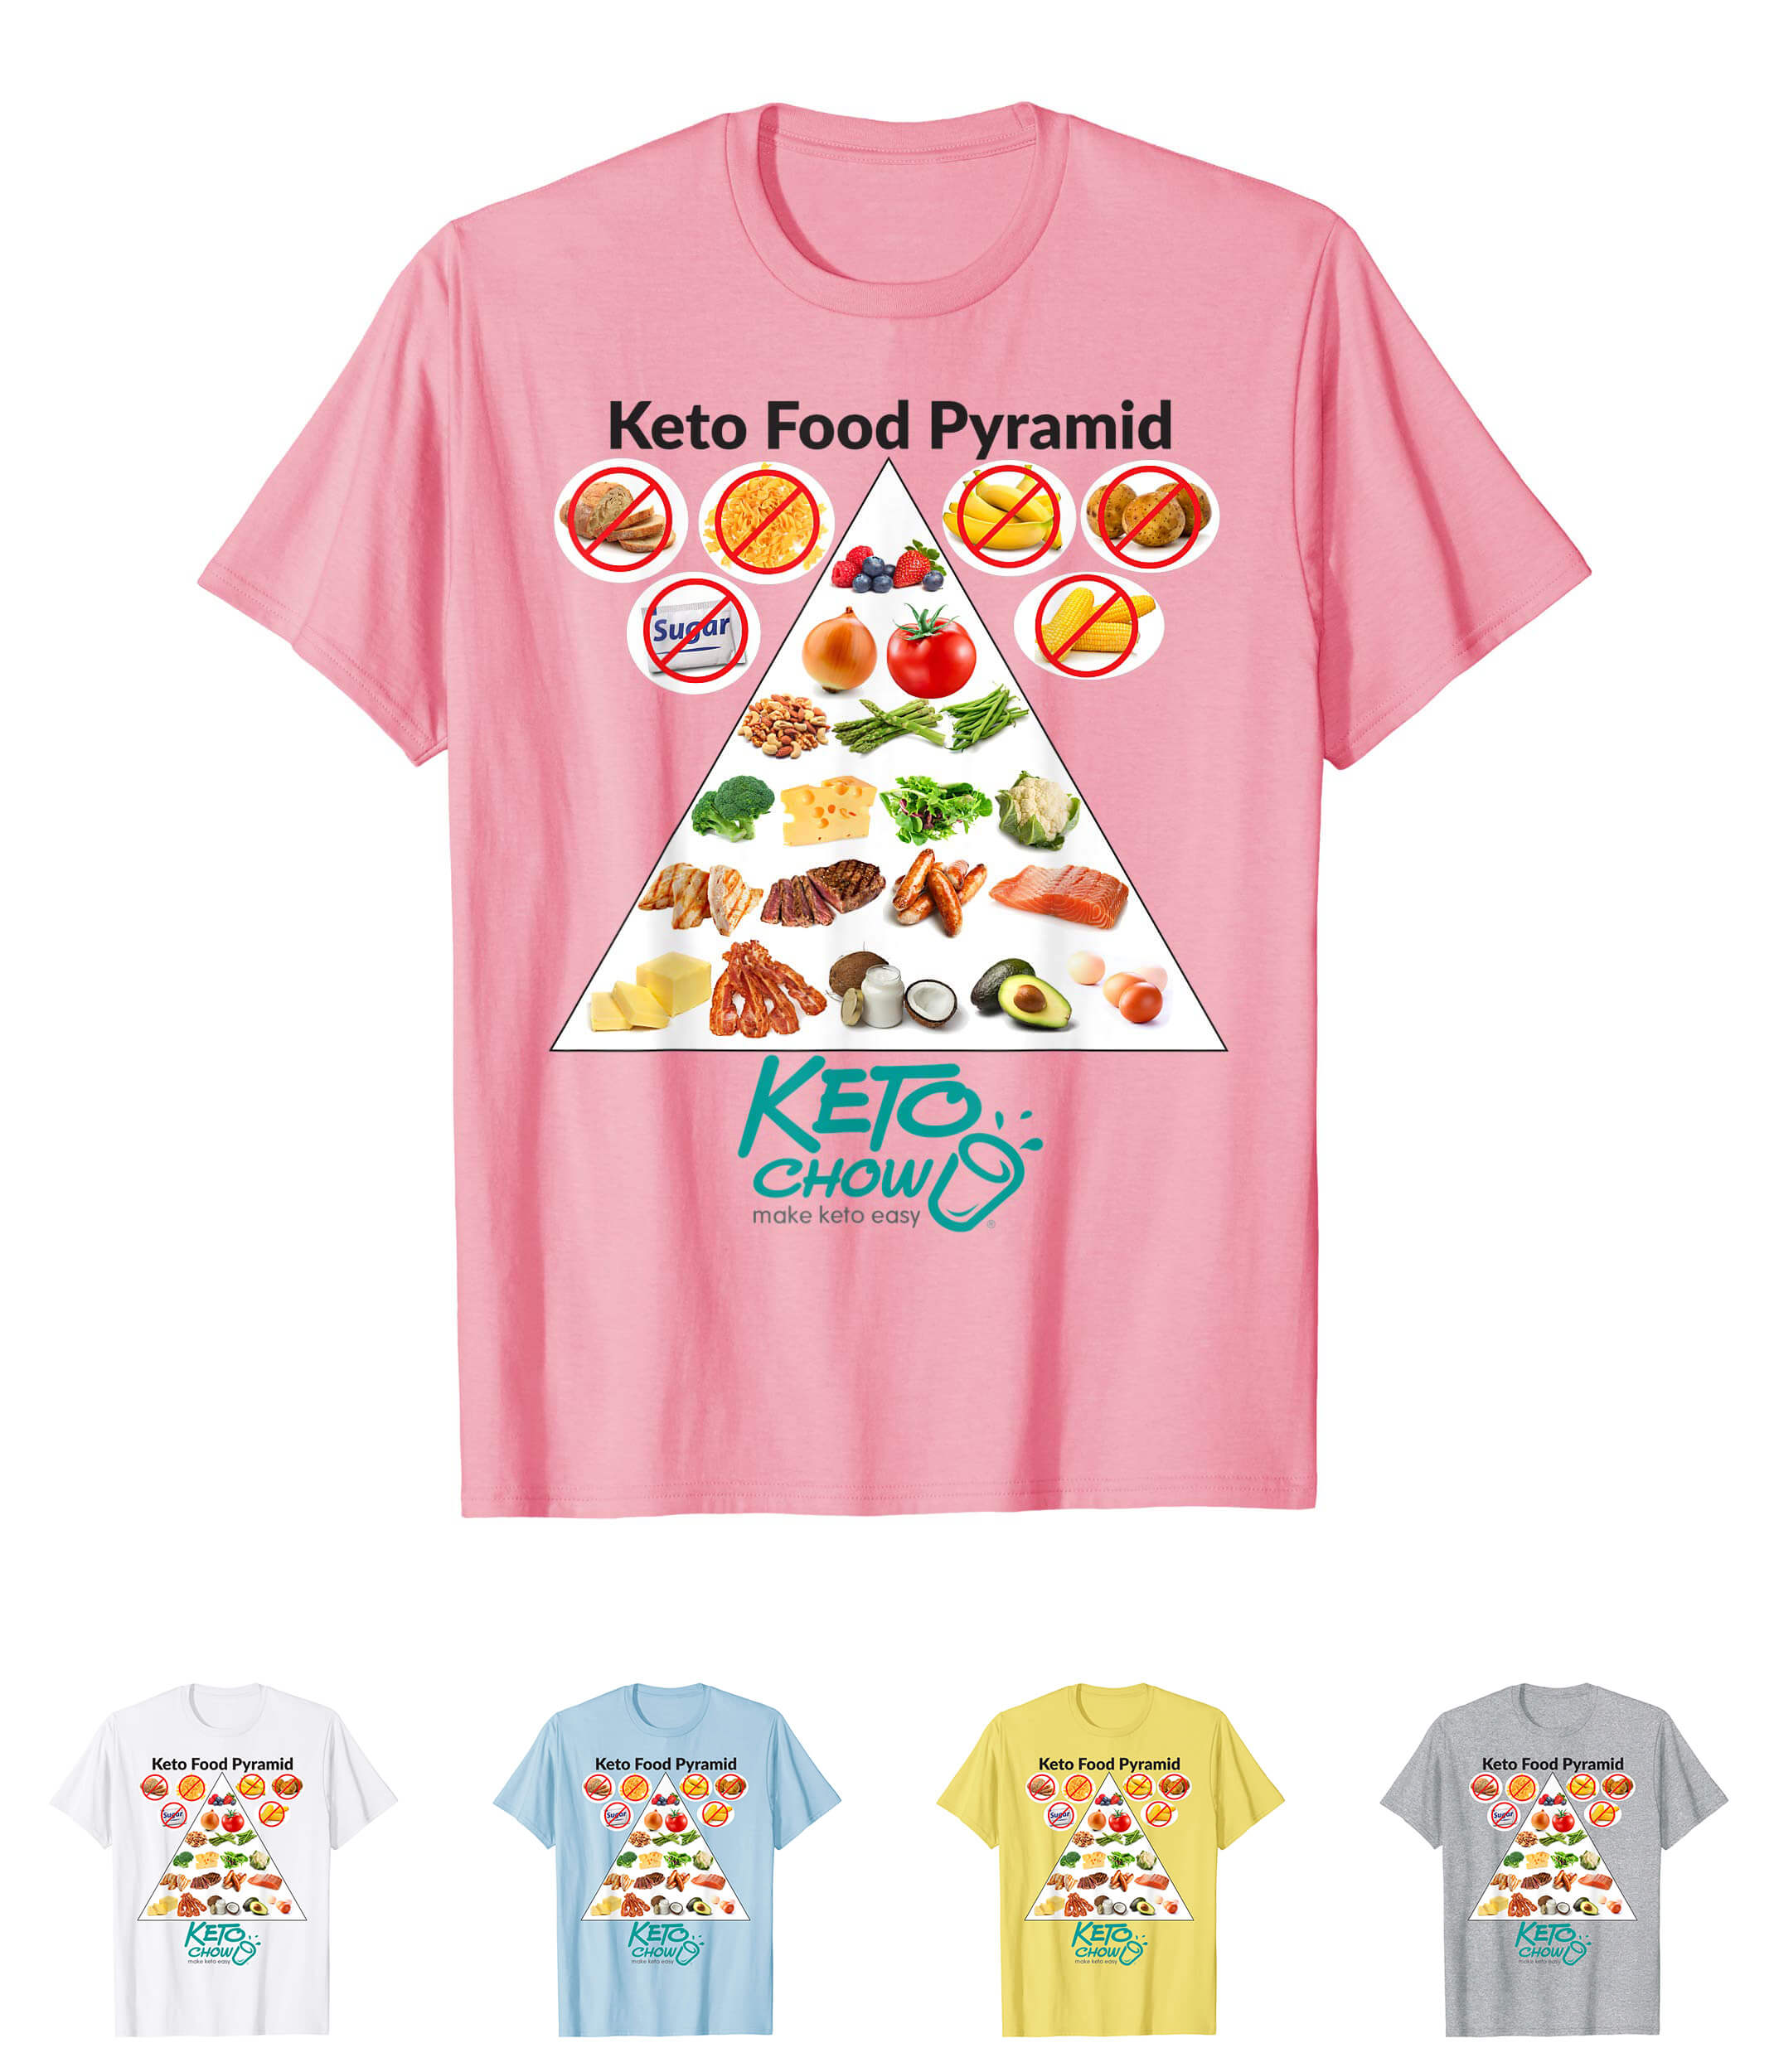 Keto food pyramid teal logo light colors t-shirt